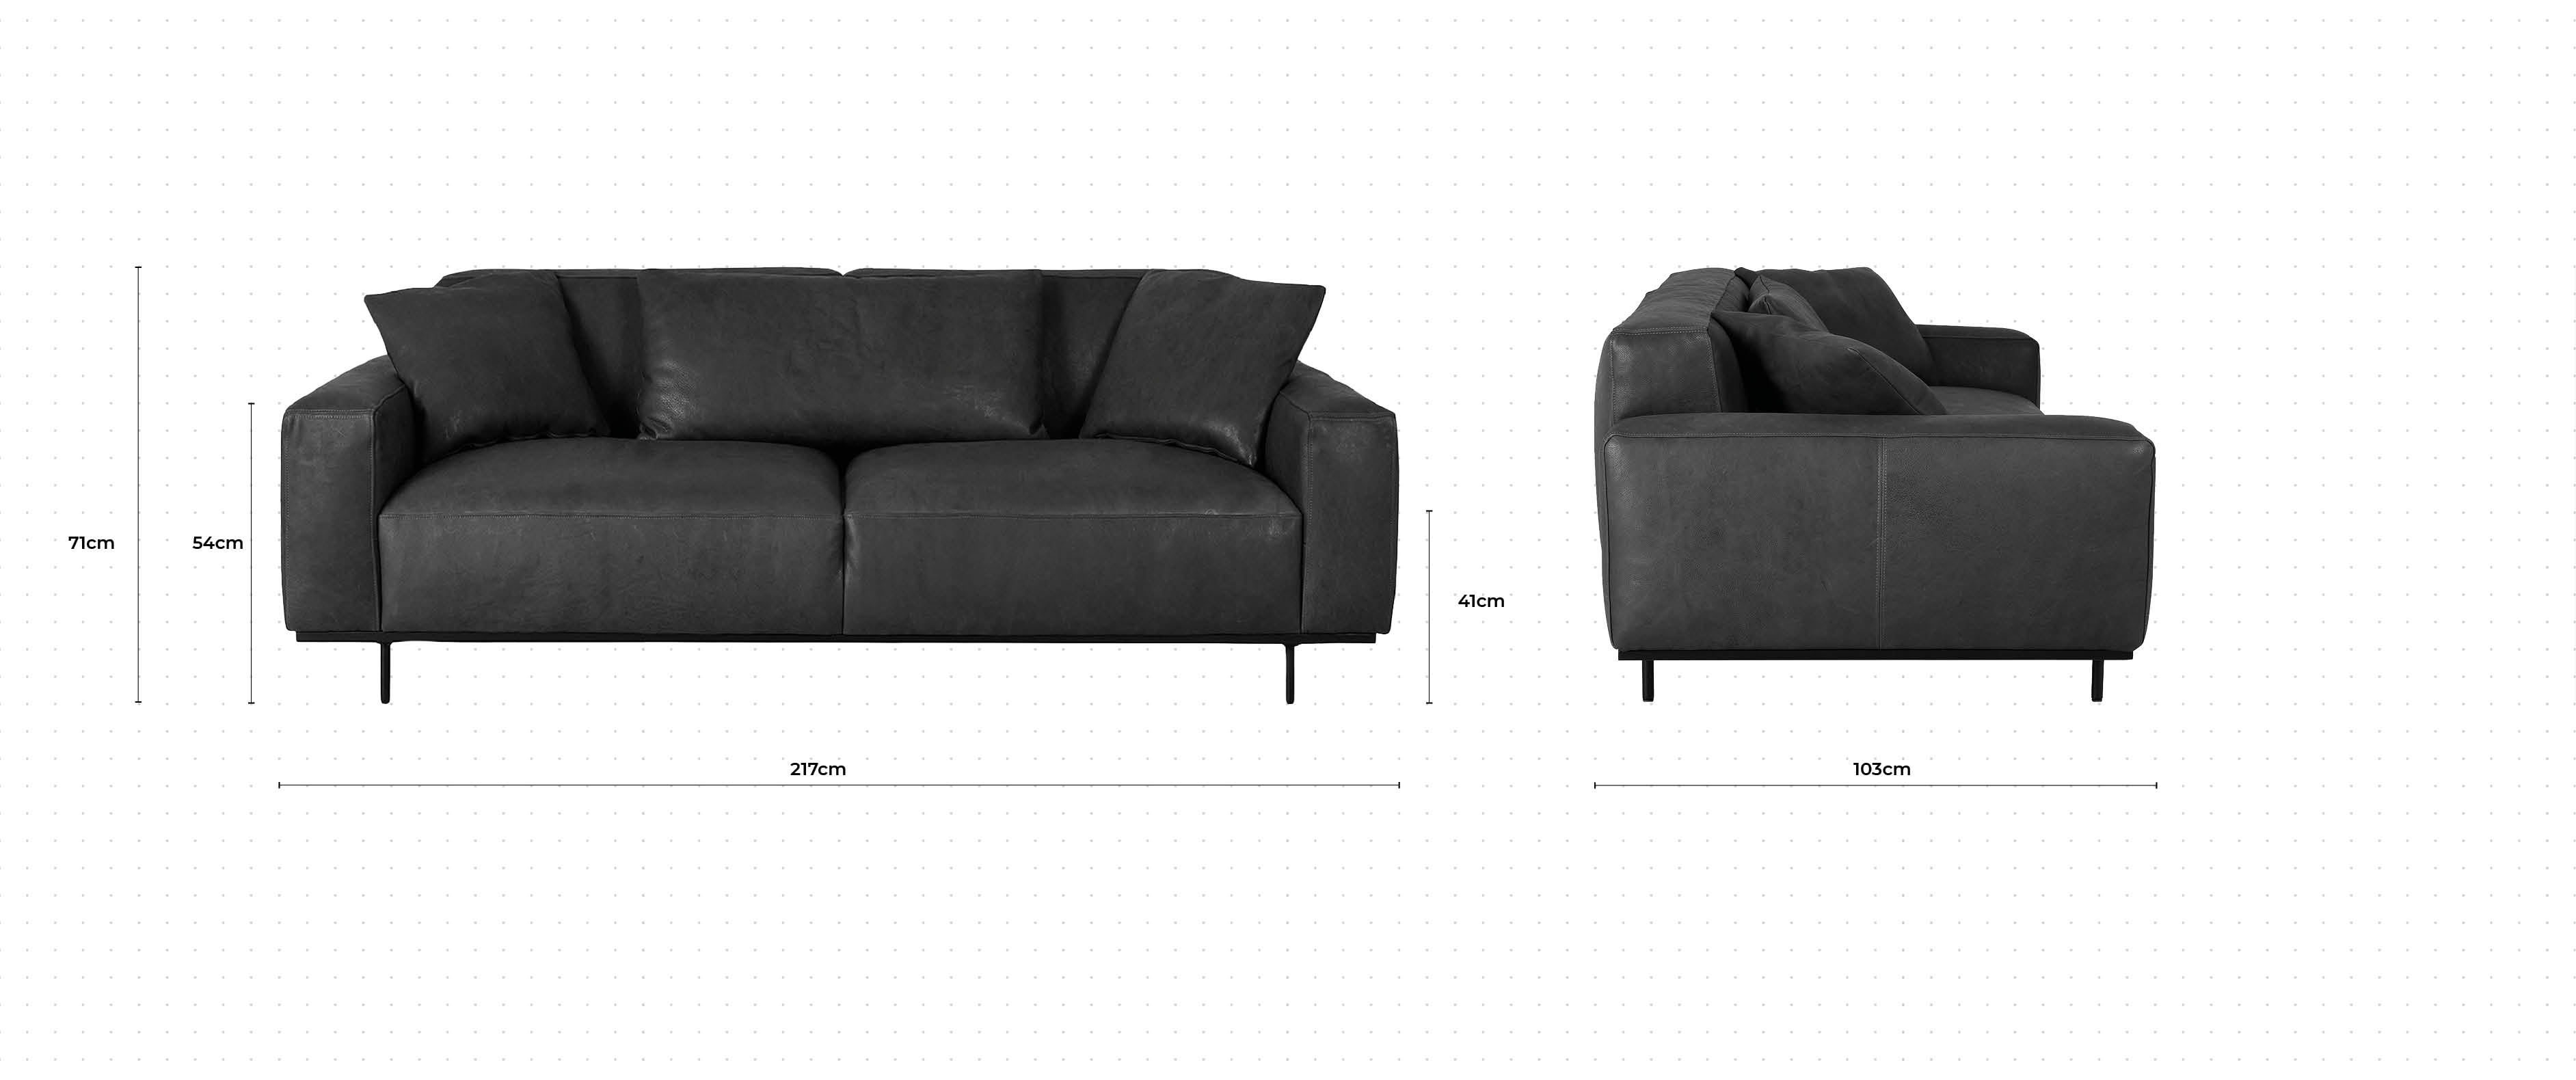 Fondant 2 Seater Sofa dimensions